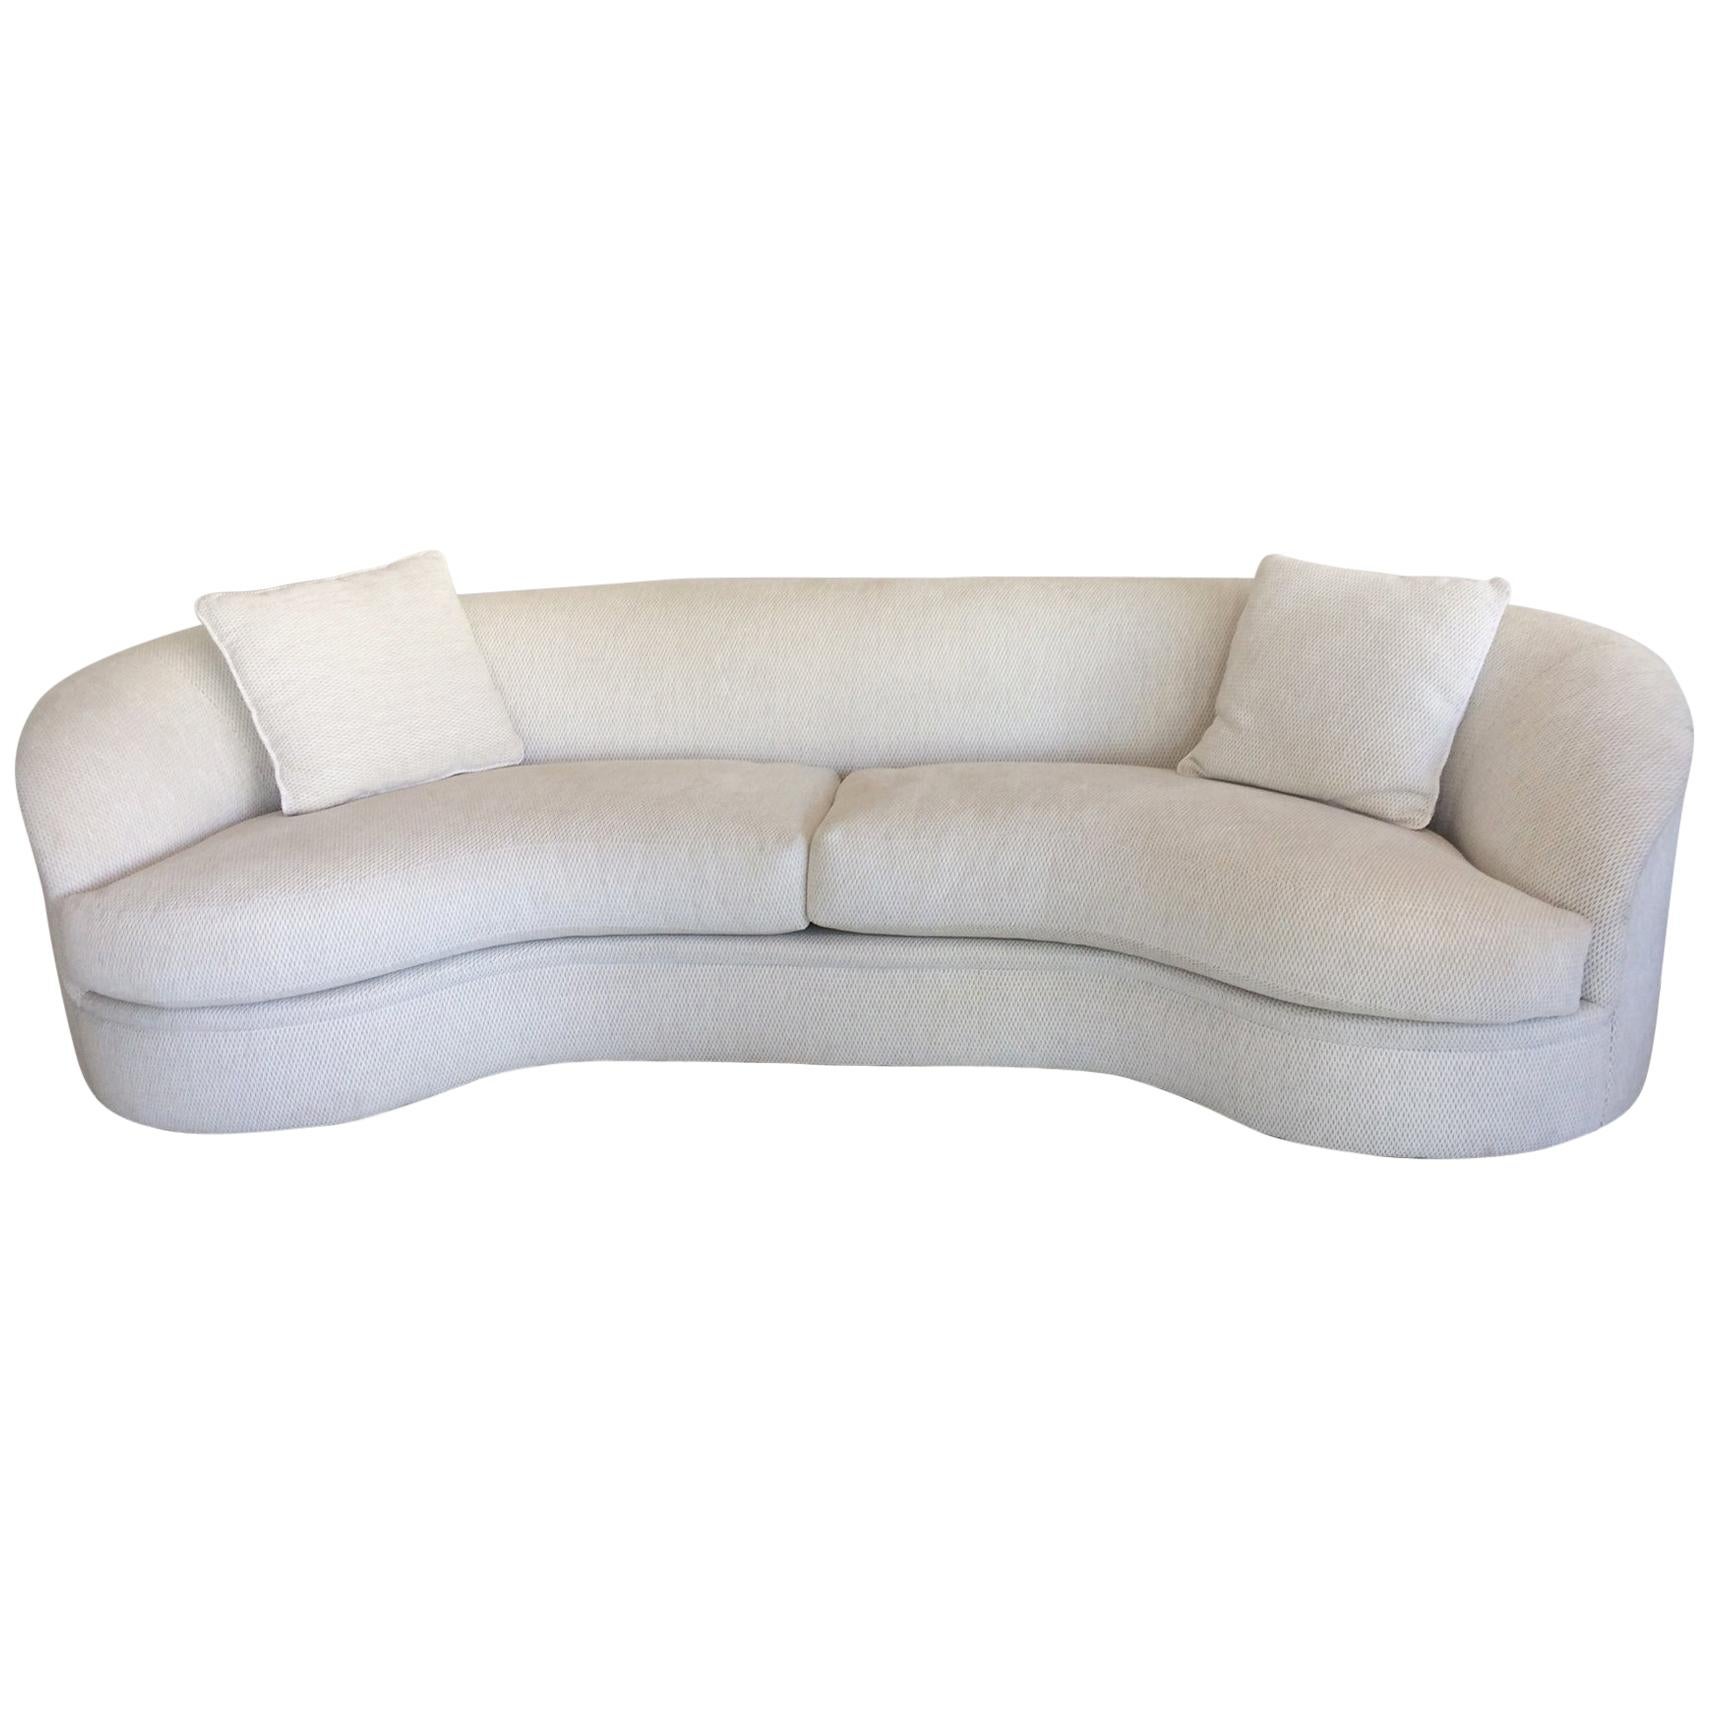 Valdimir Kagan Biomorphic Curved Sofa for Directional